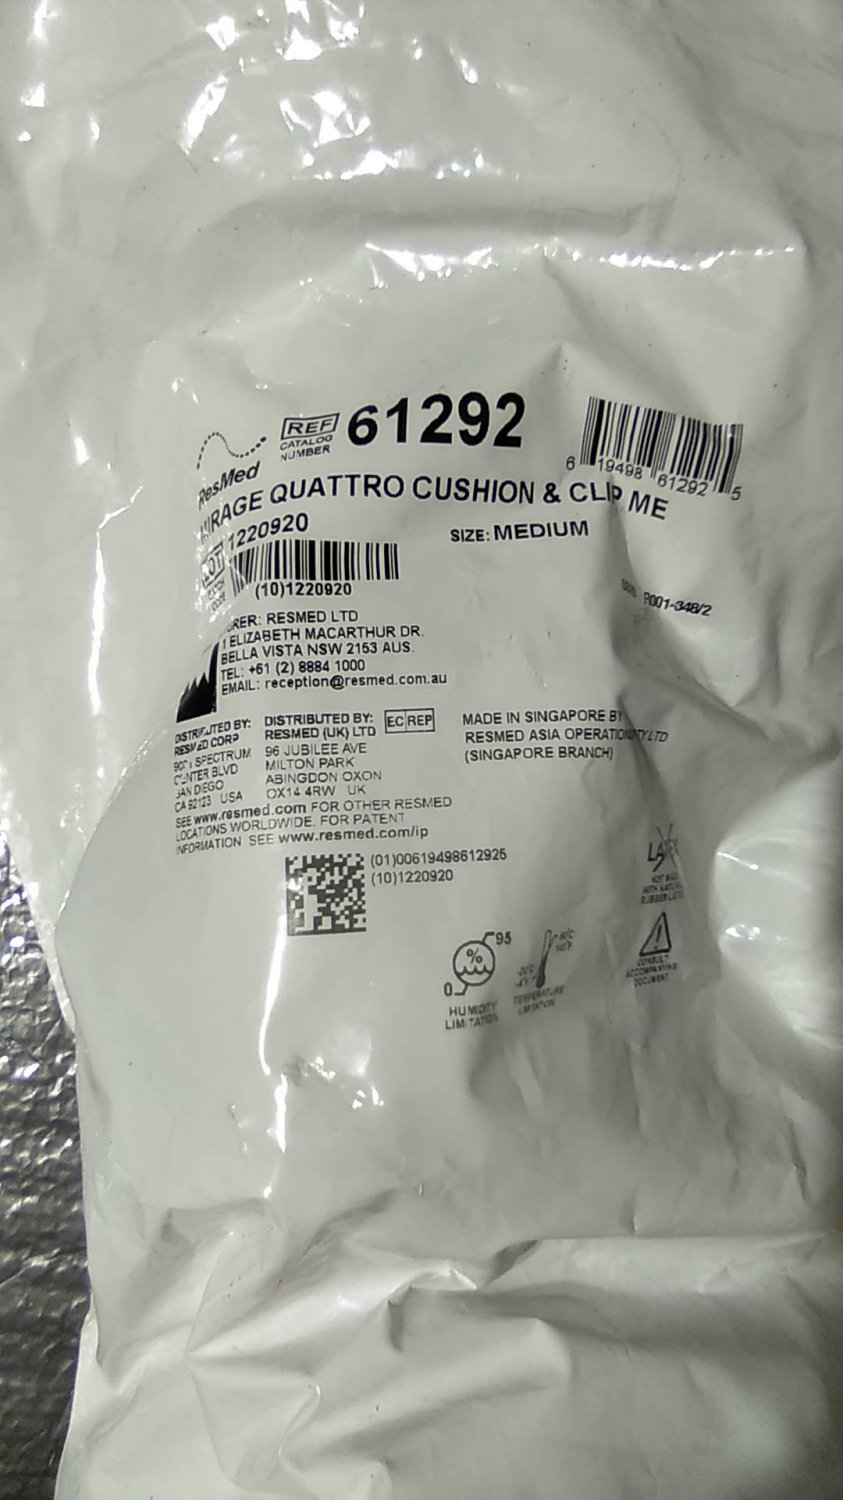 ResMed Mirage Quattro Cushion & Clip 61292 Size Medium New Sealed